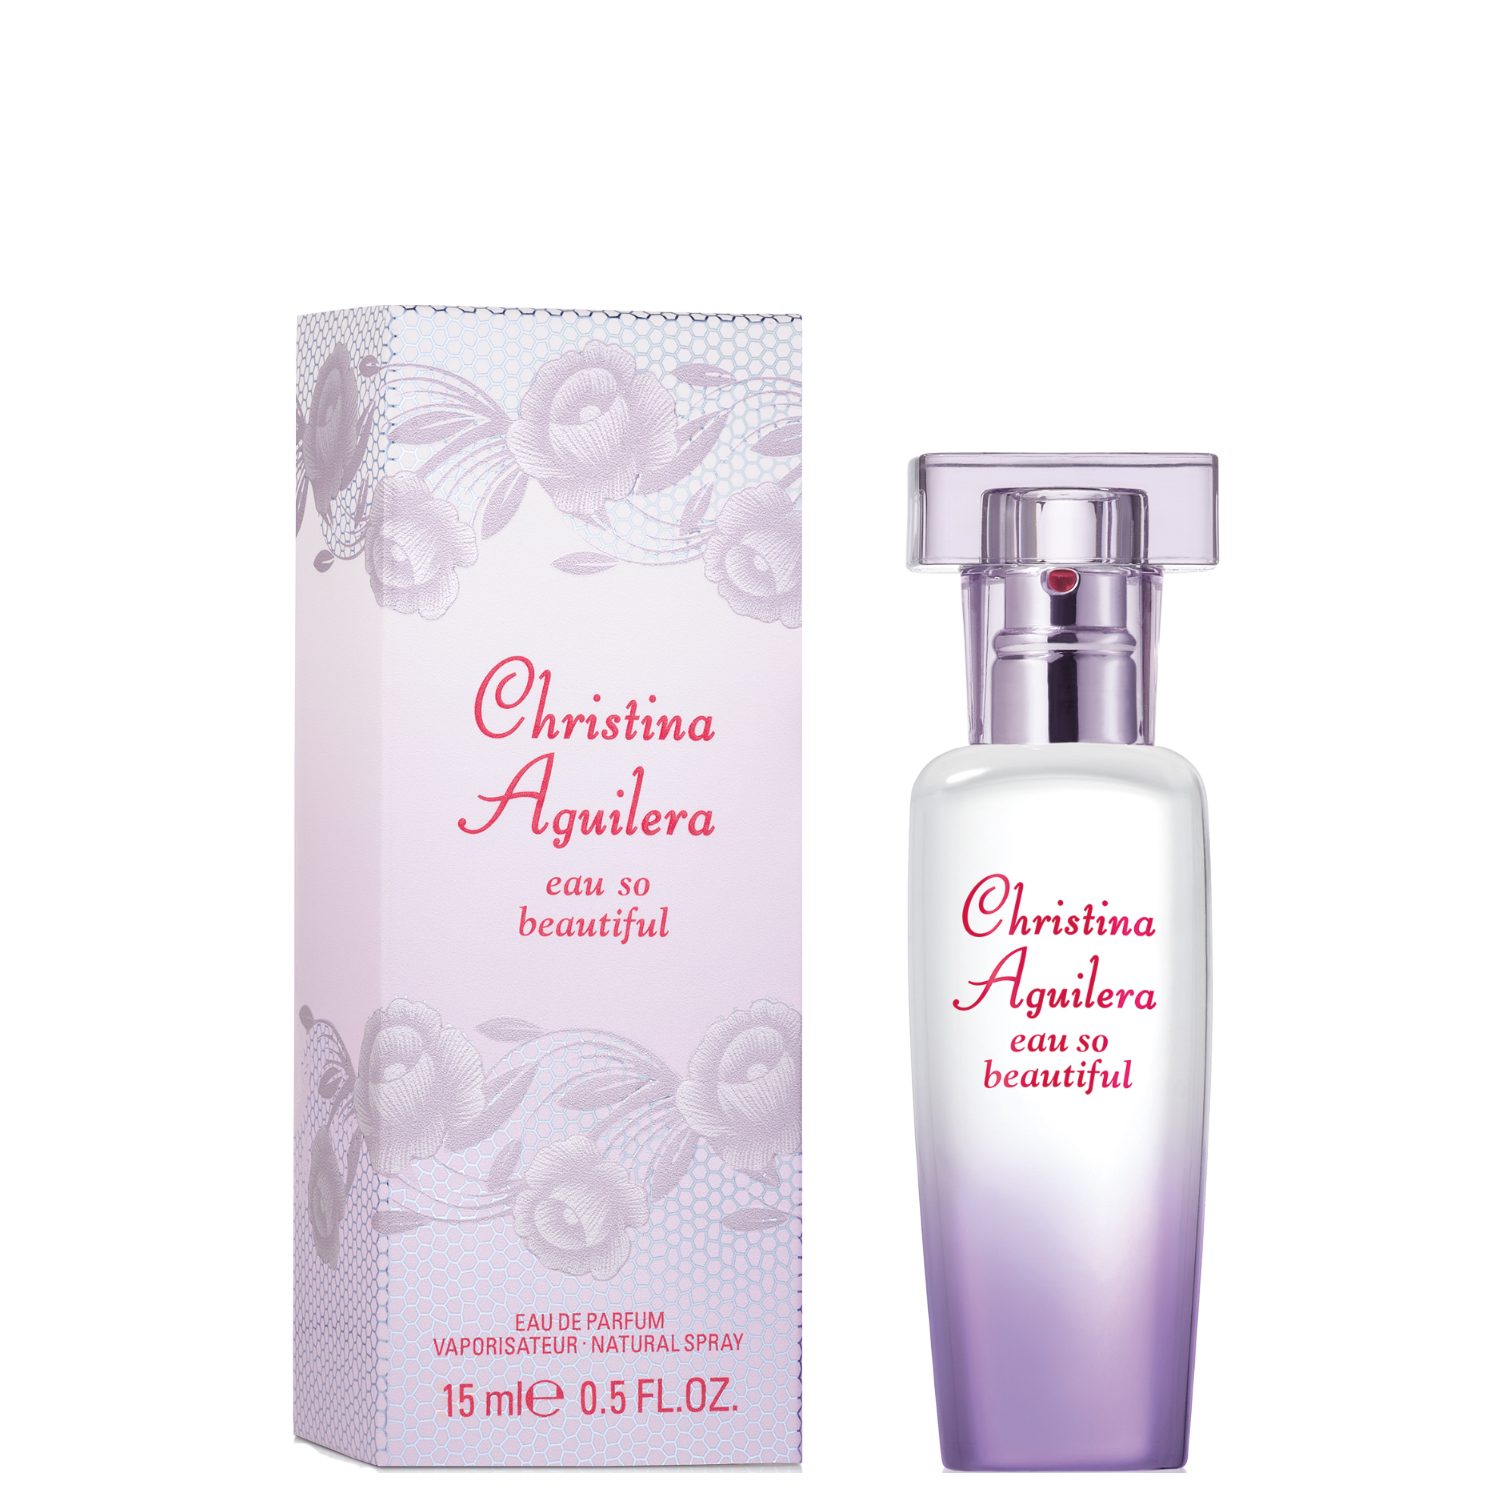 Christina Aguilera Eau So Beautiful Eau de Parfum 15ml 